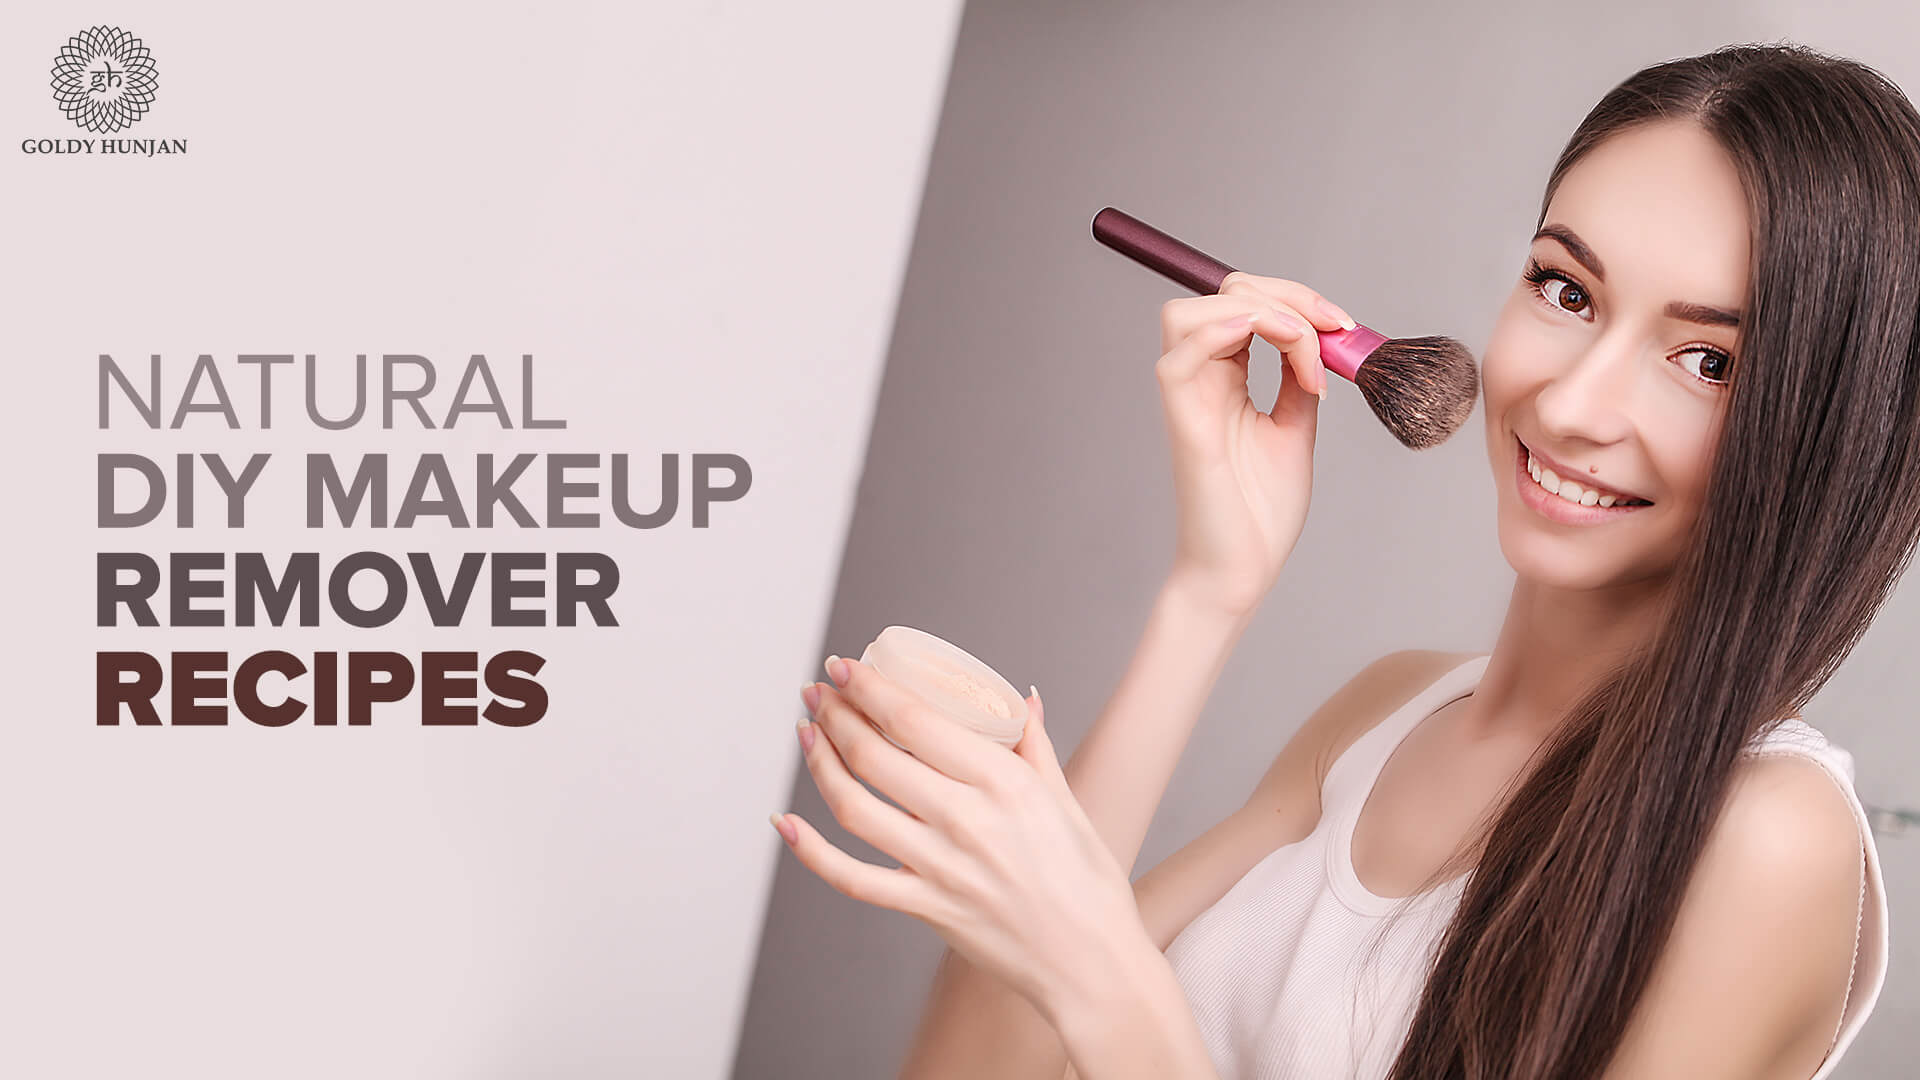 Natural DIY makeup remover recipes